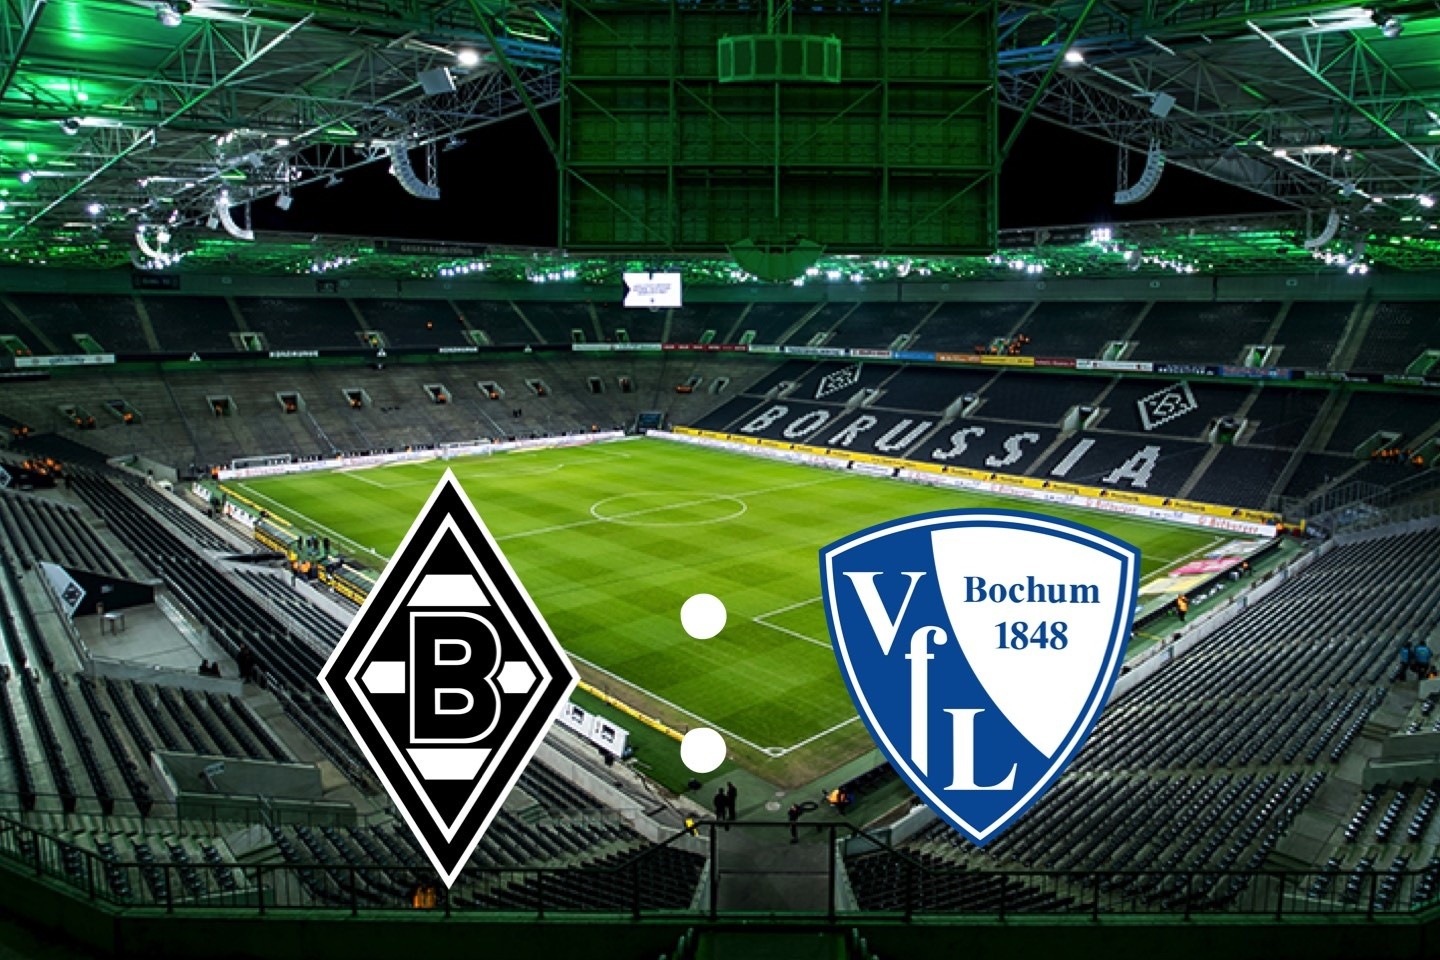 Borussia Mönchengladbach,Bustour,Warendorfer Fohlen,Vfl Bochum